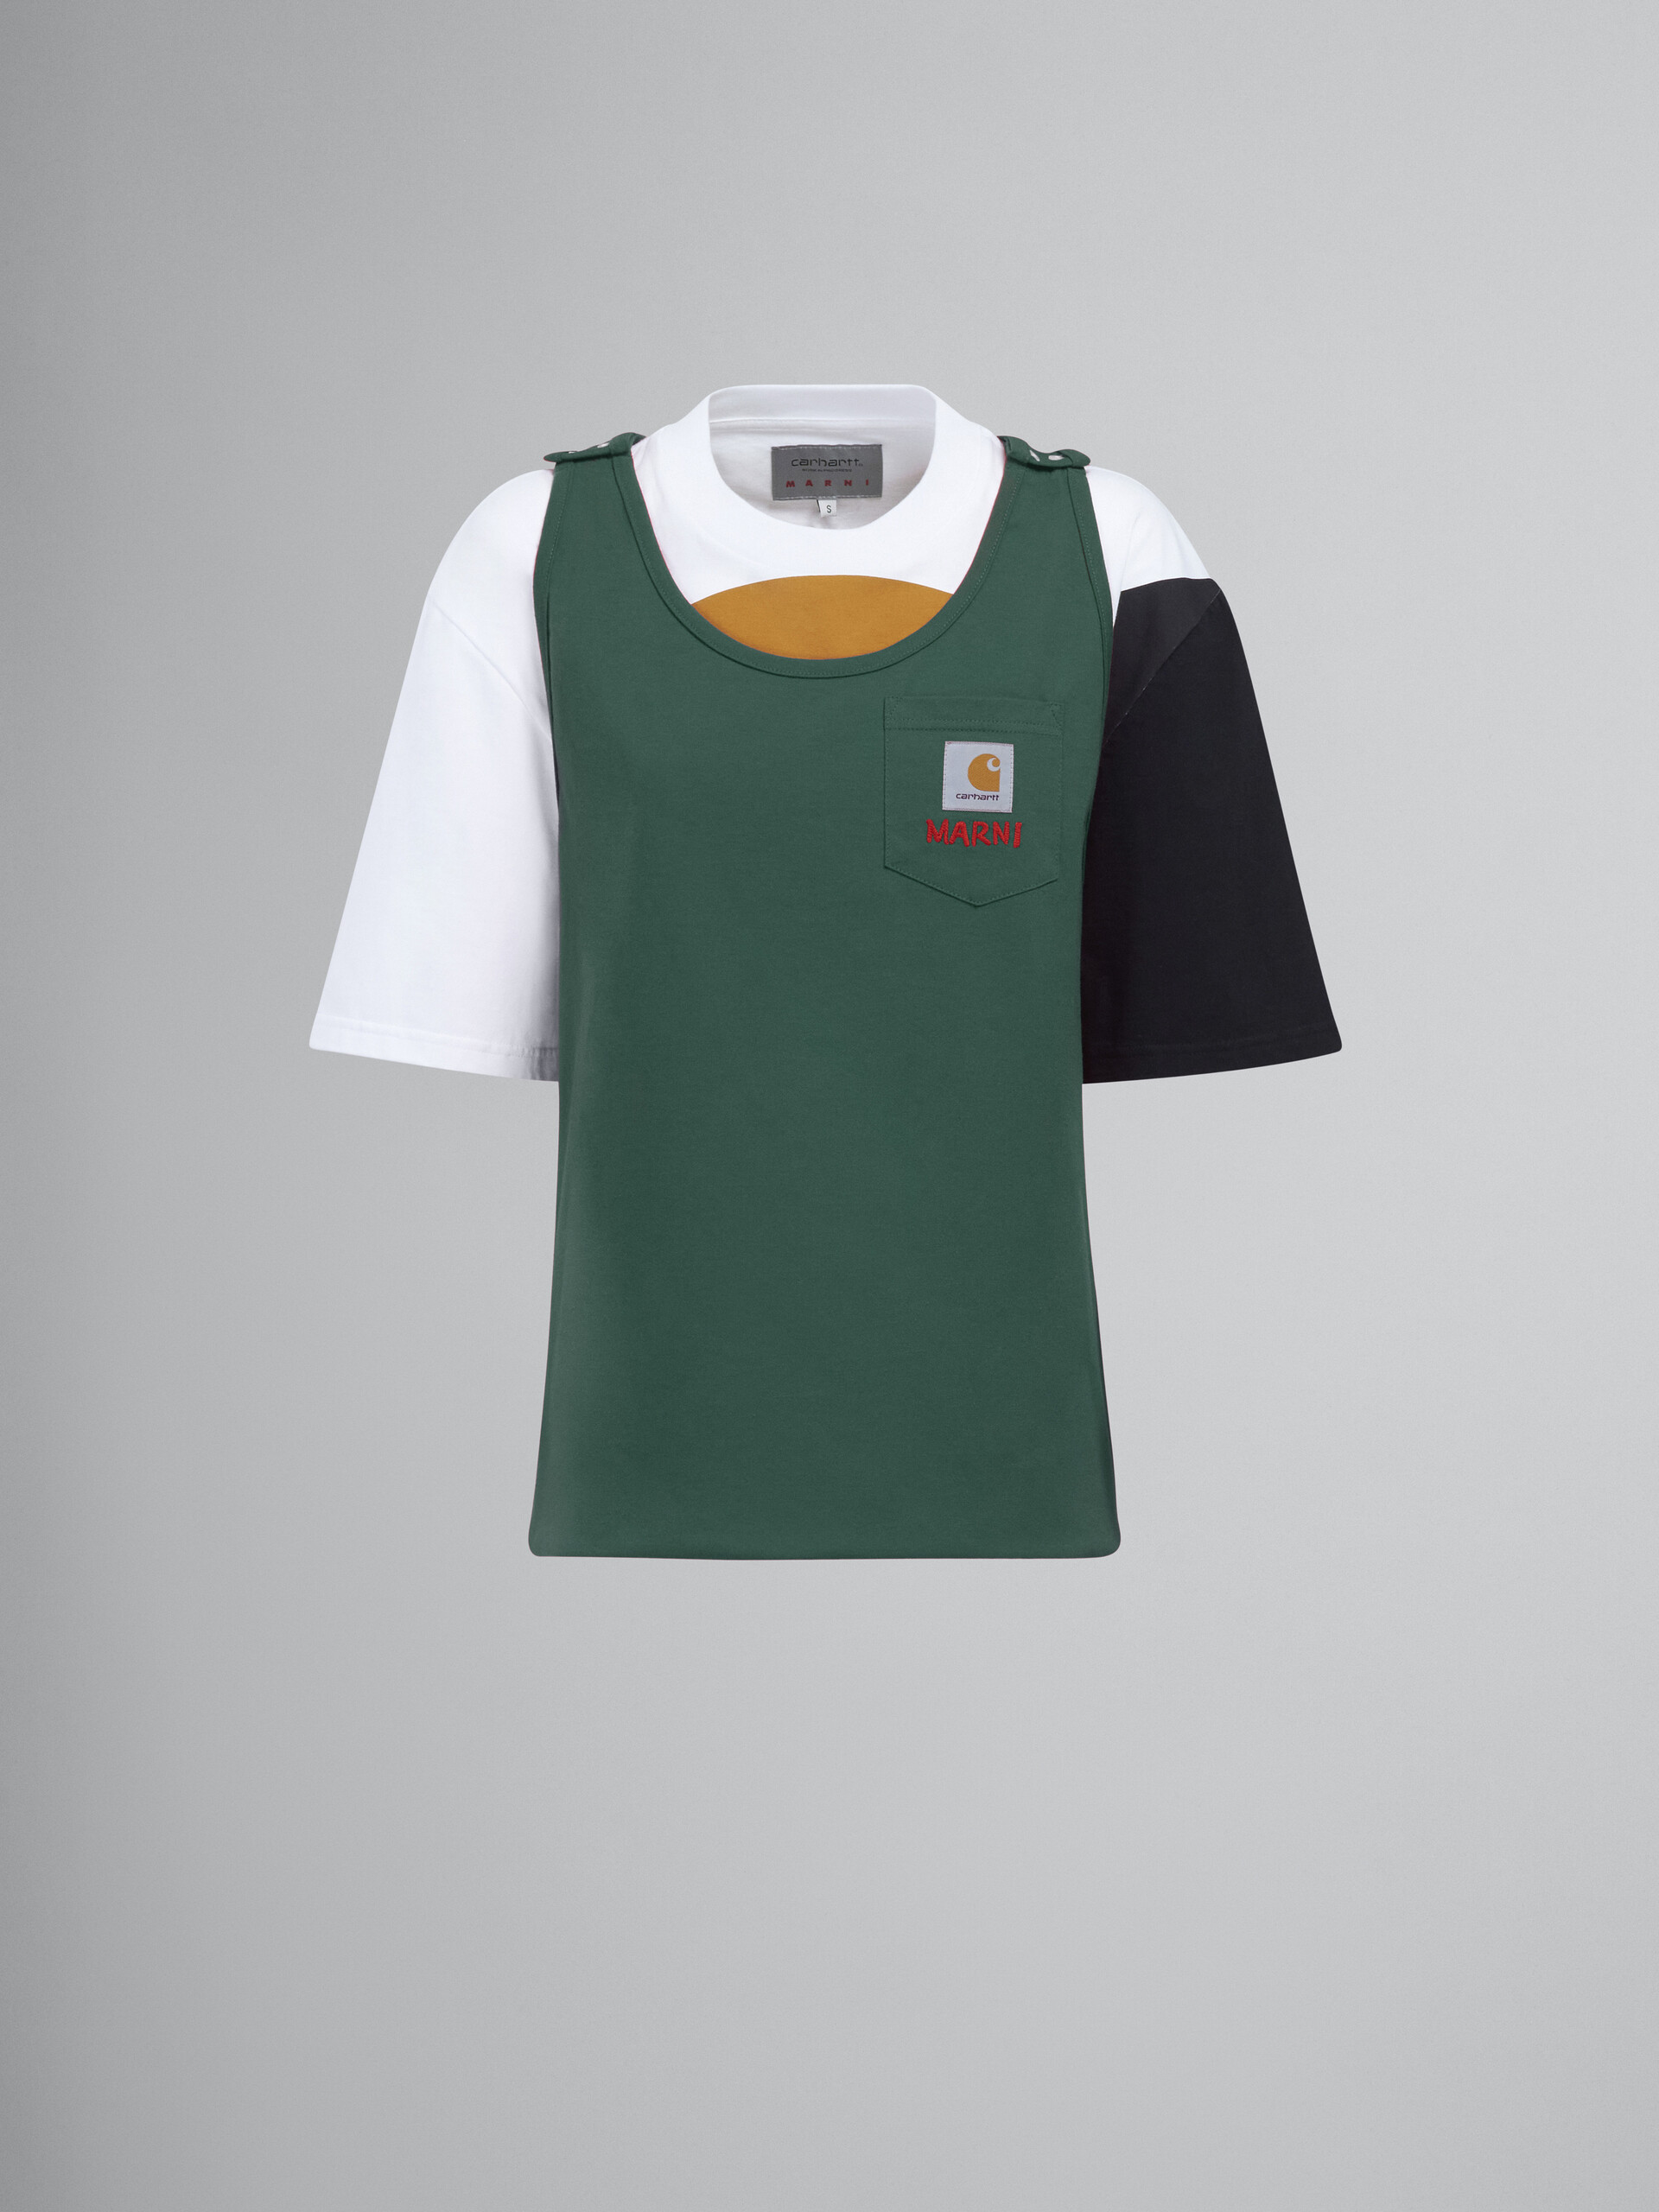 MARNI x CARHARTT WIP - green logo T-shirt - T-shirts - Image 1